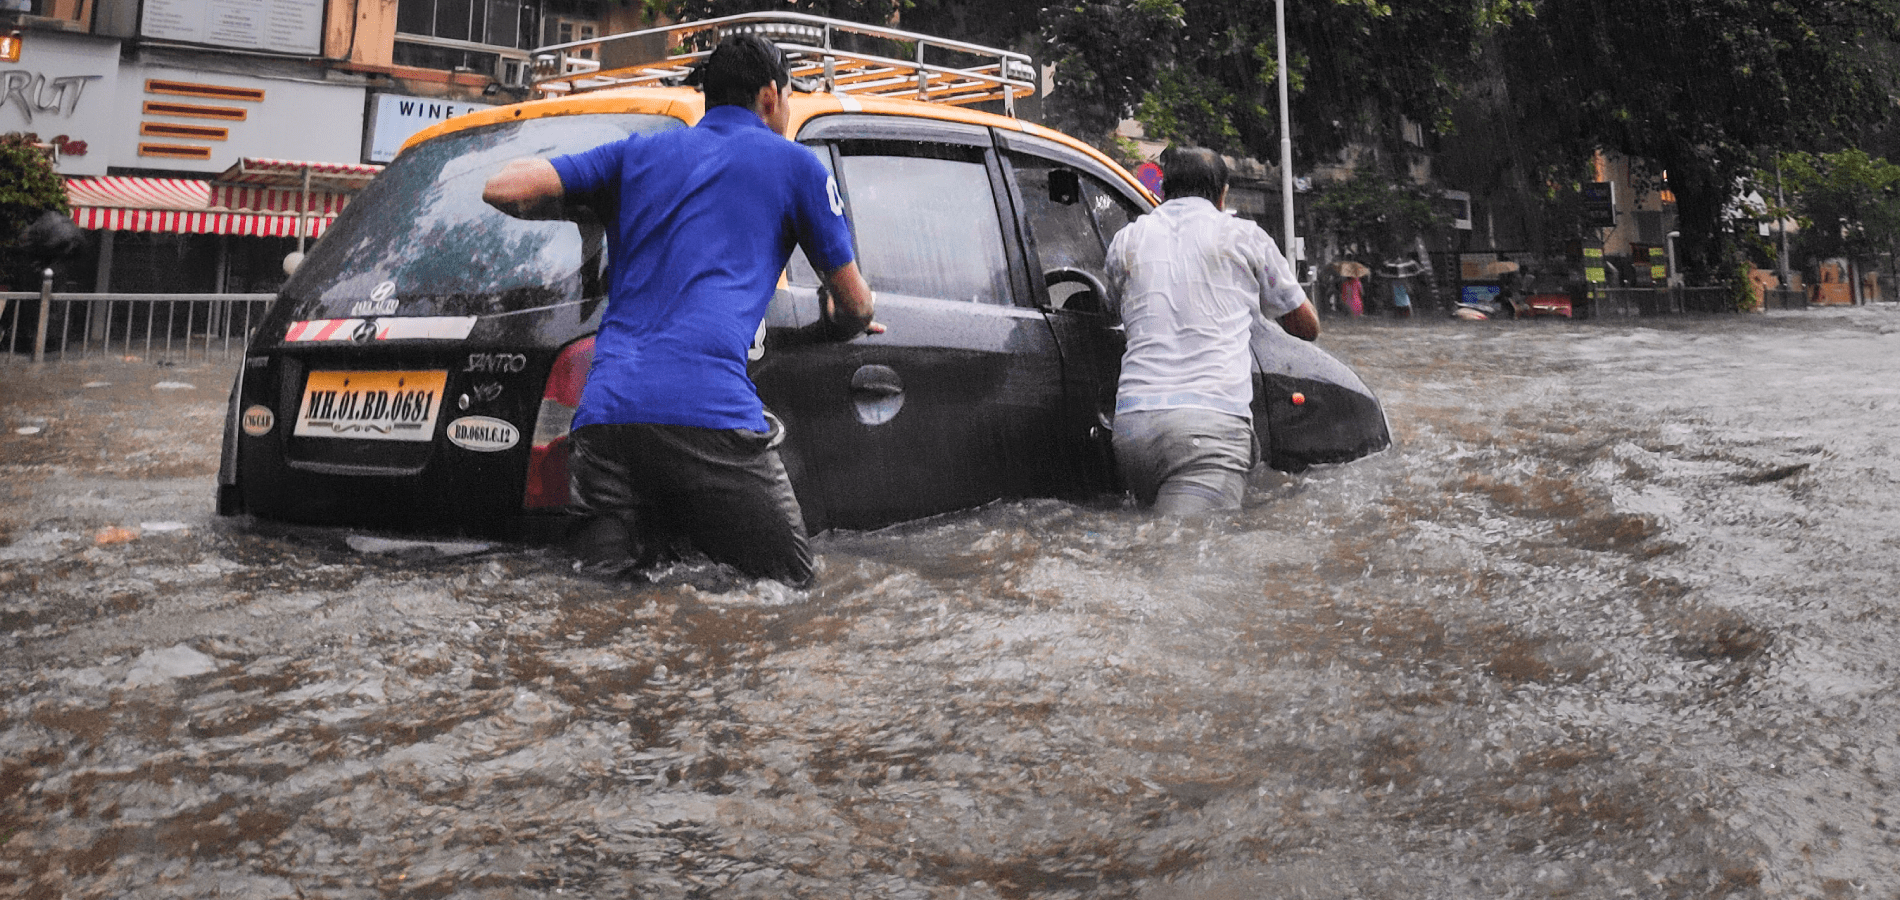 Two men pushing a car through flooded roads